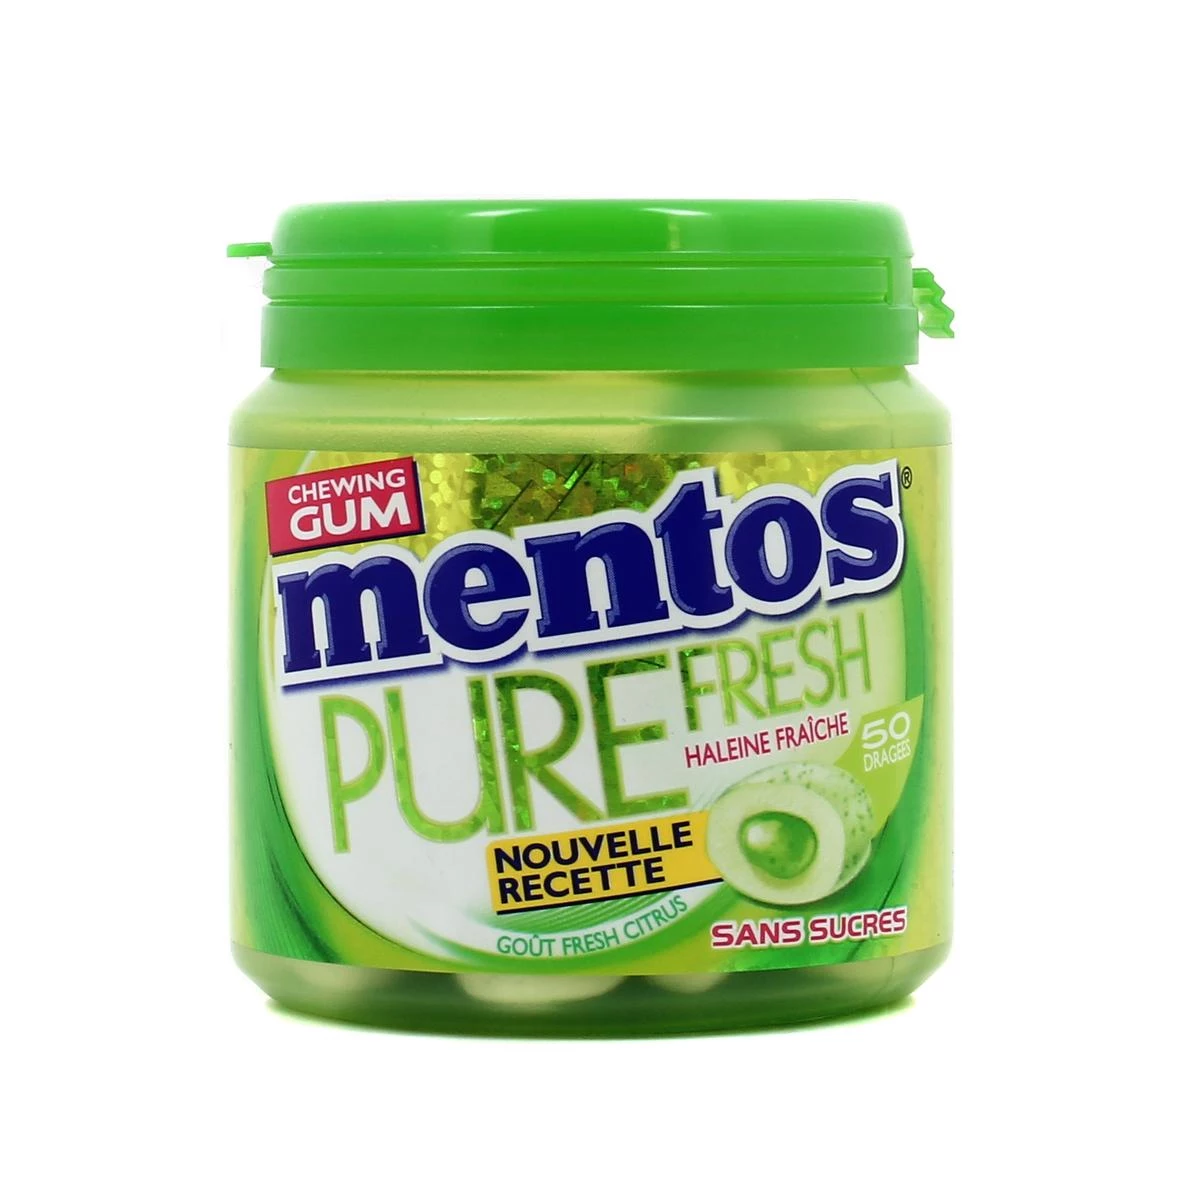 100g Mentos Fresh Citrus Box